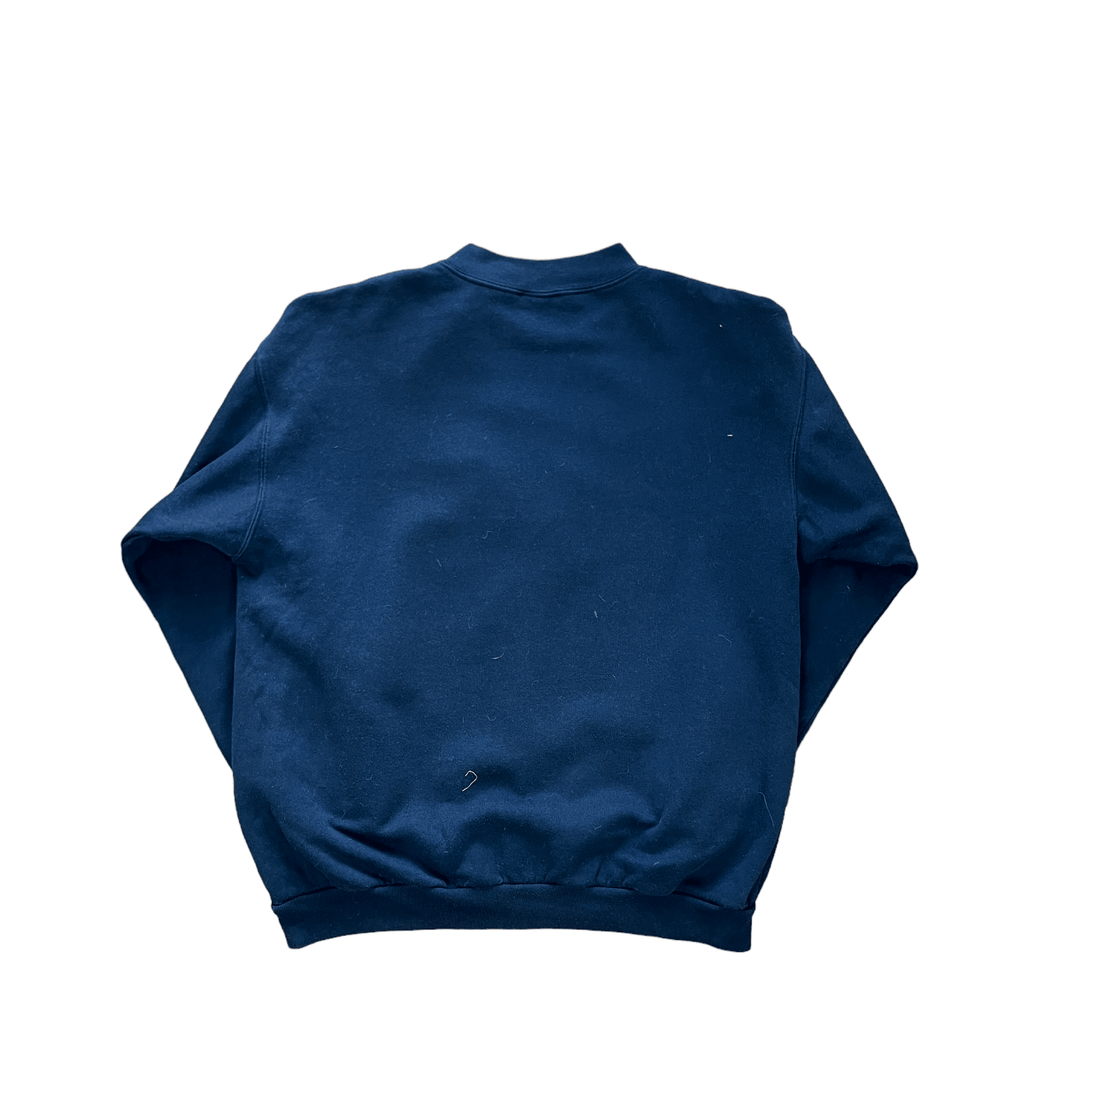 Vintage 90s Navy Blue Disney Sweatshirt - Large (Recommended Size - Medium) - The Streetwear Studio